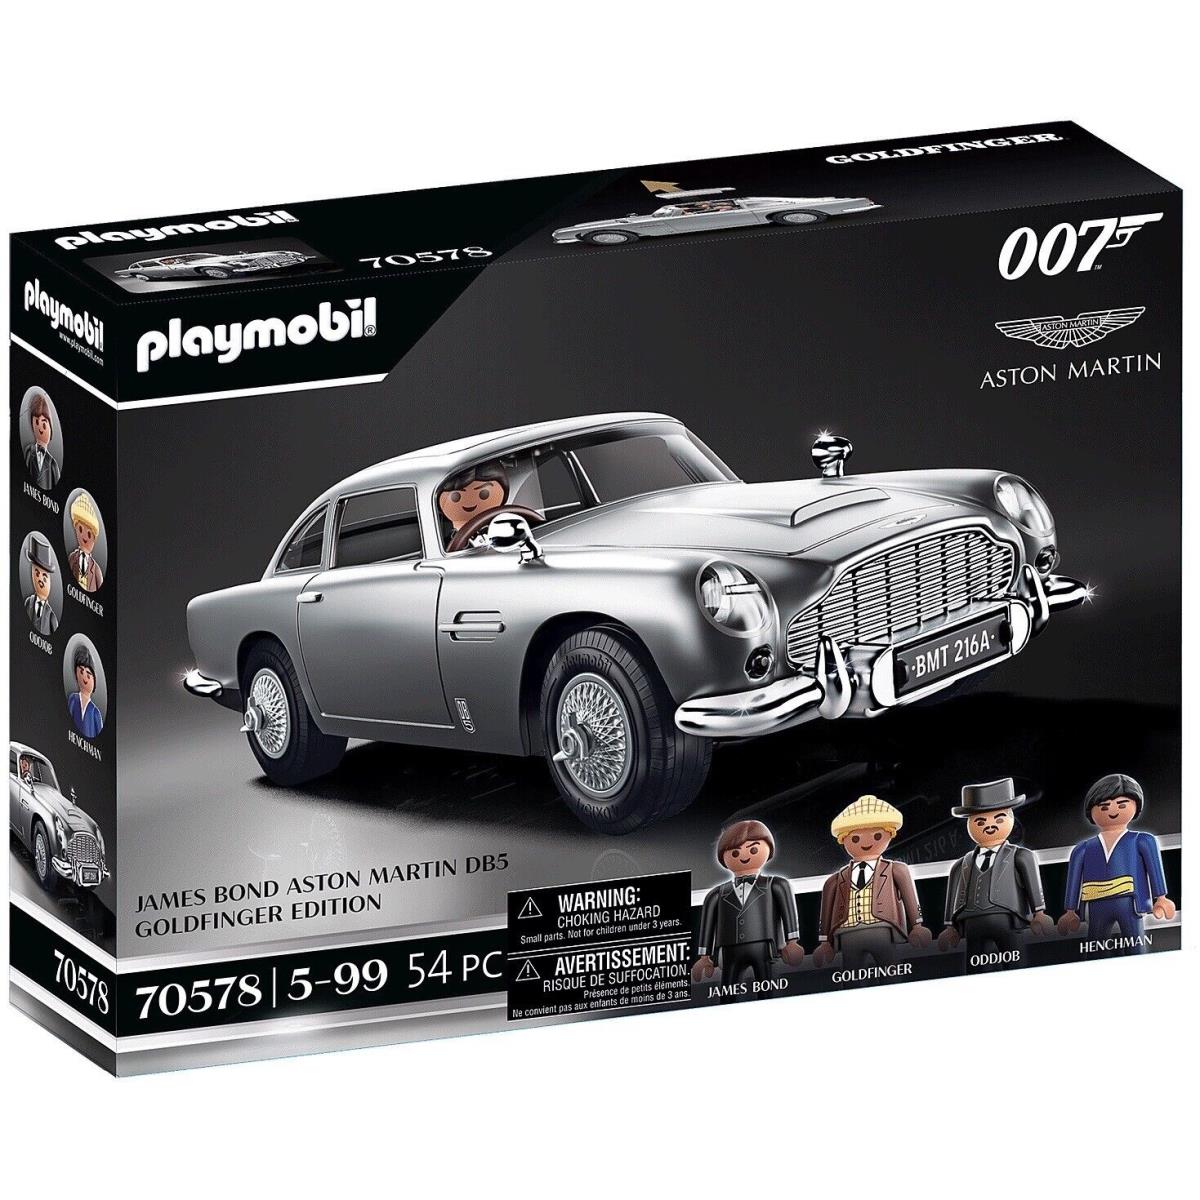 Playmobil 70578 James Bond Aston Martin DB5 - Goldfinger 007 Edition